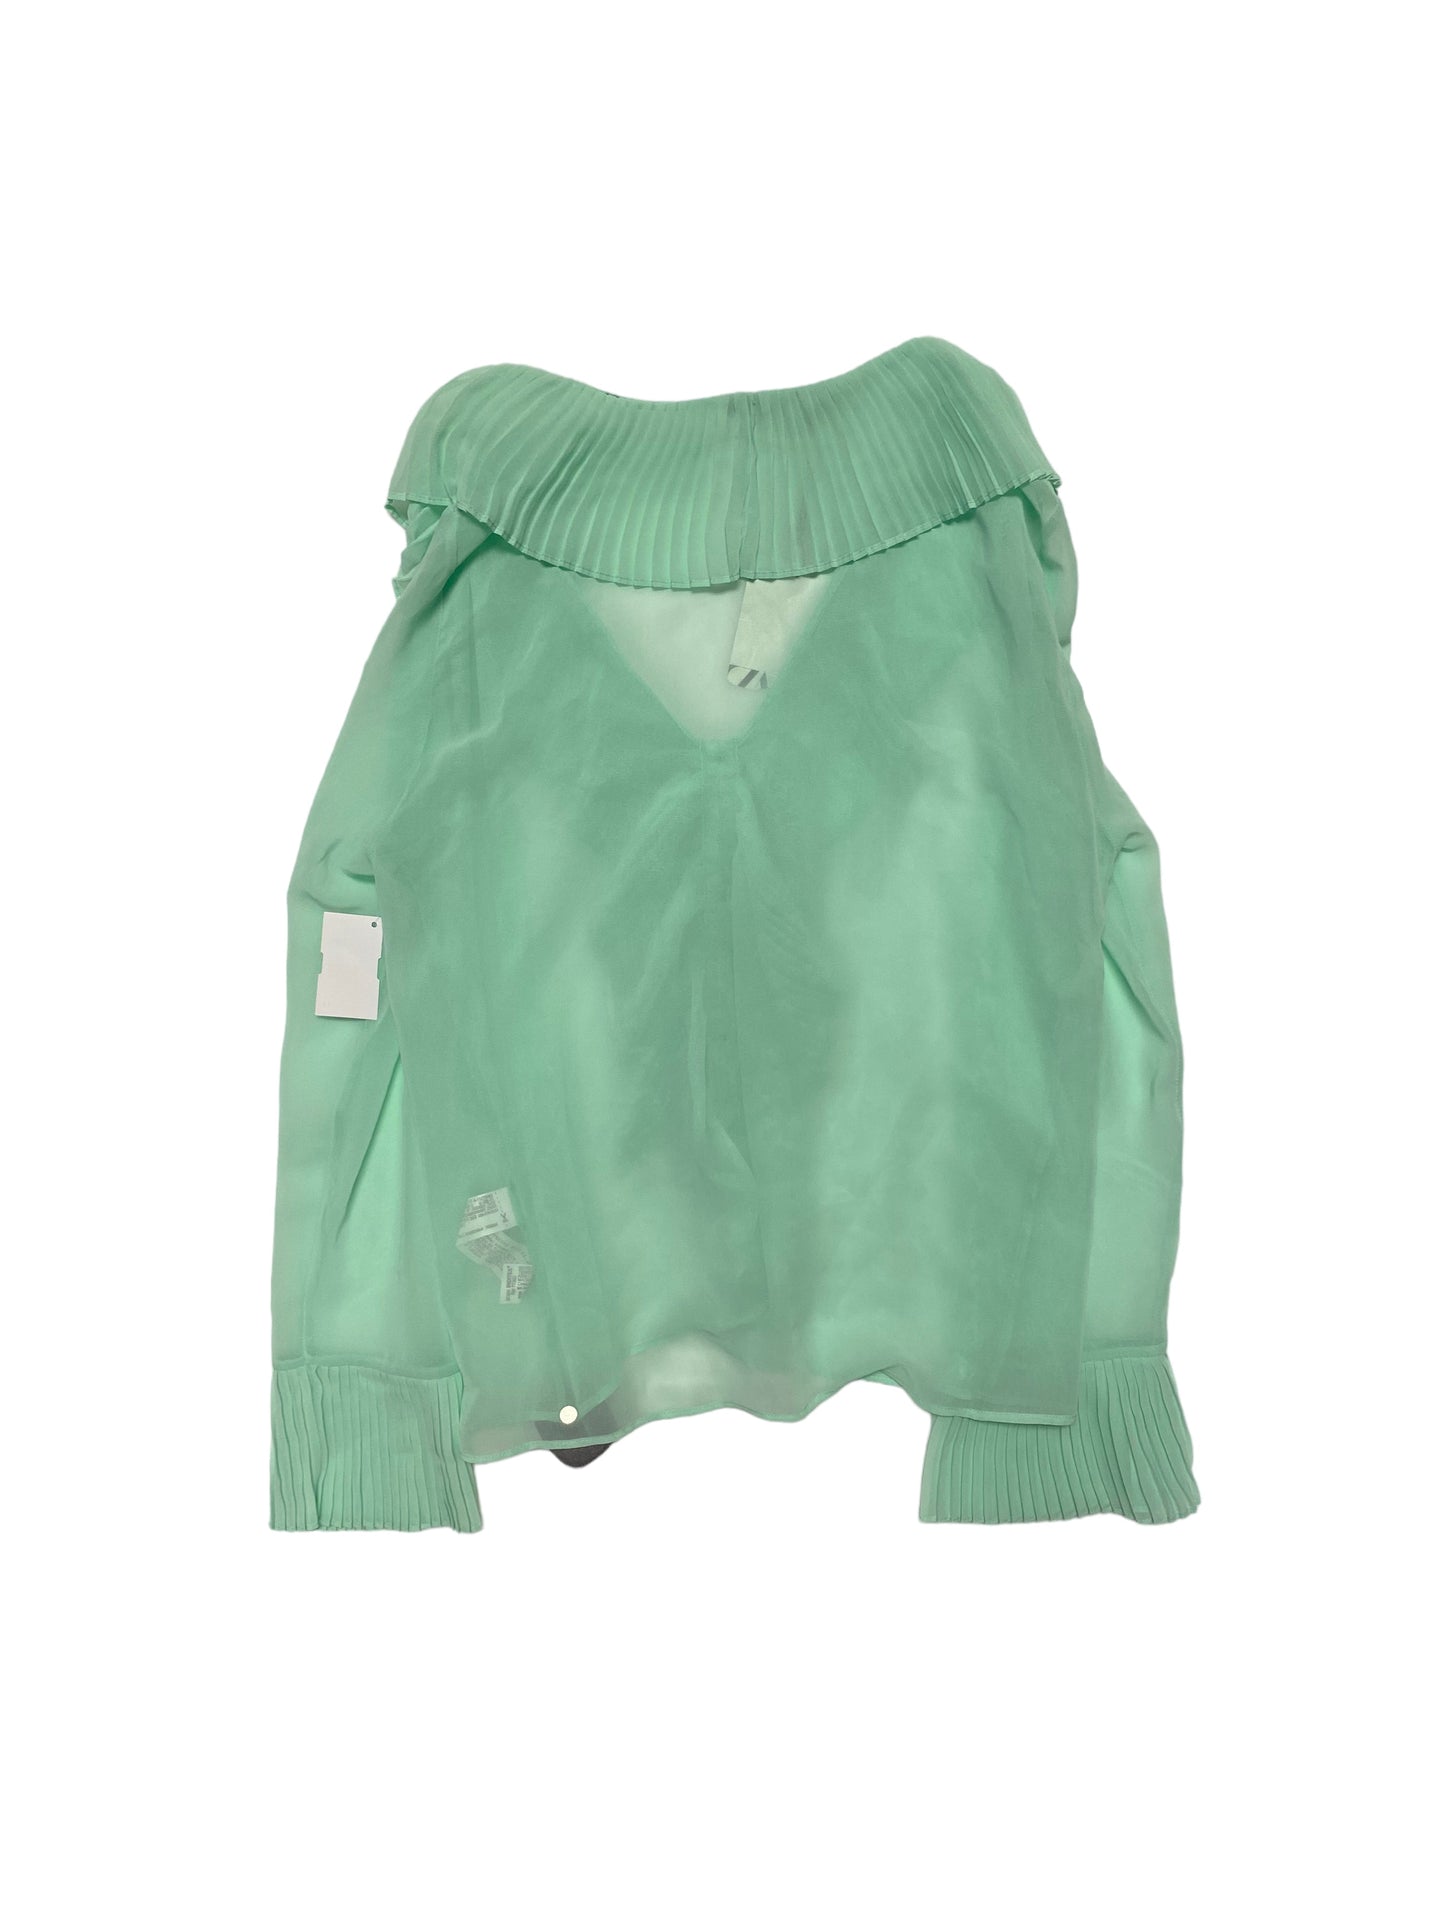 Green Top Long Sleeve Zara, Size S